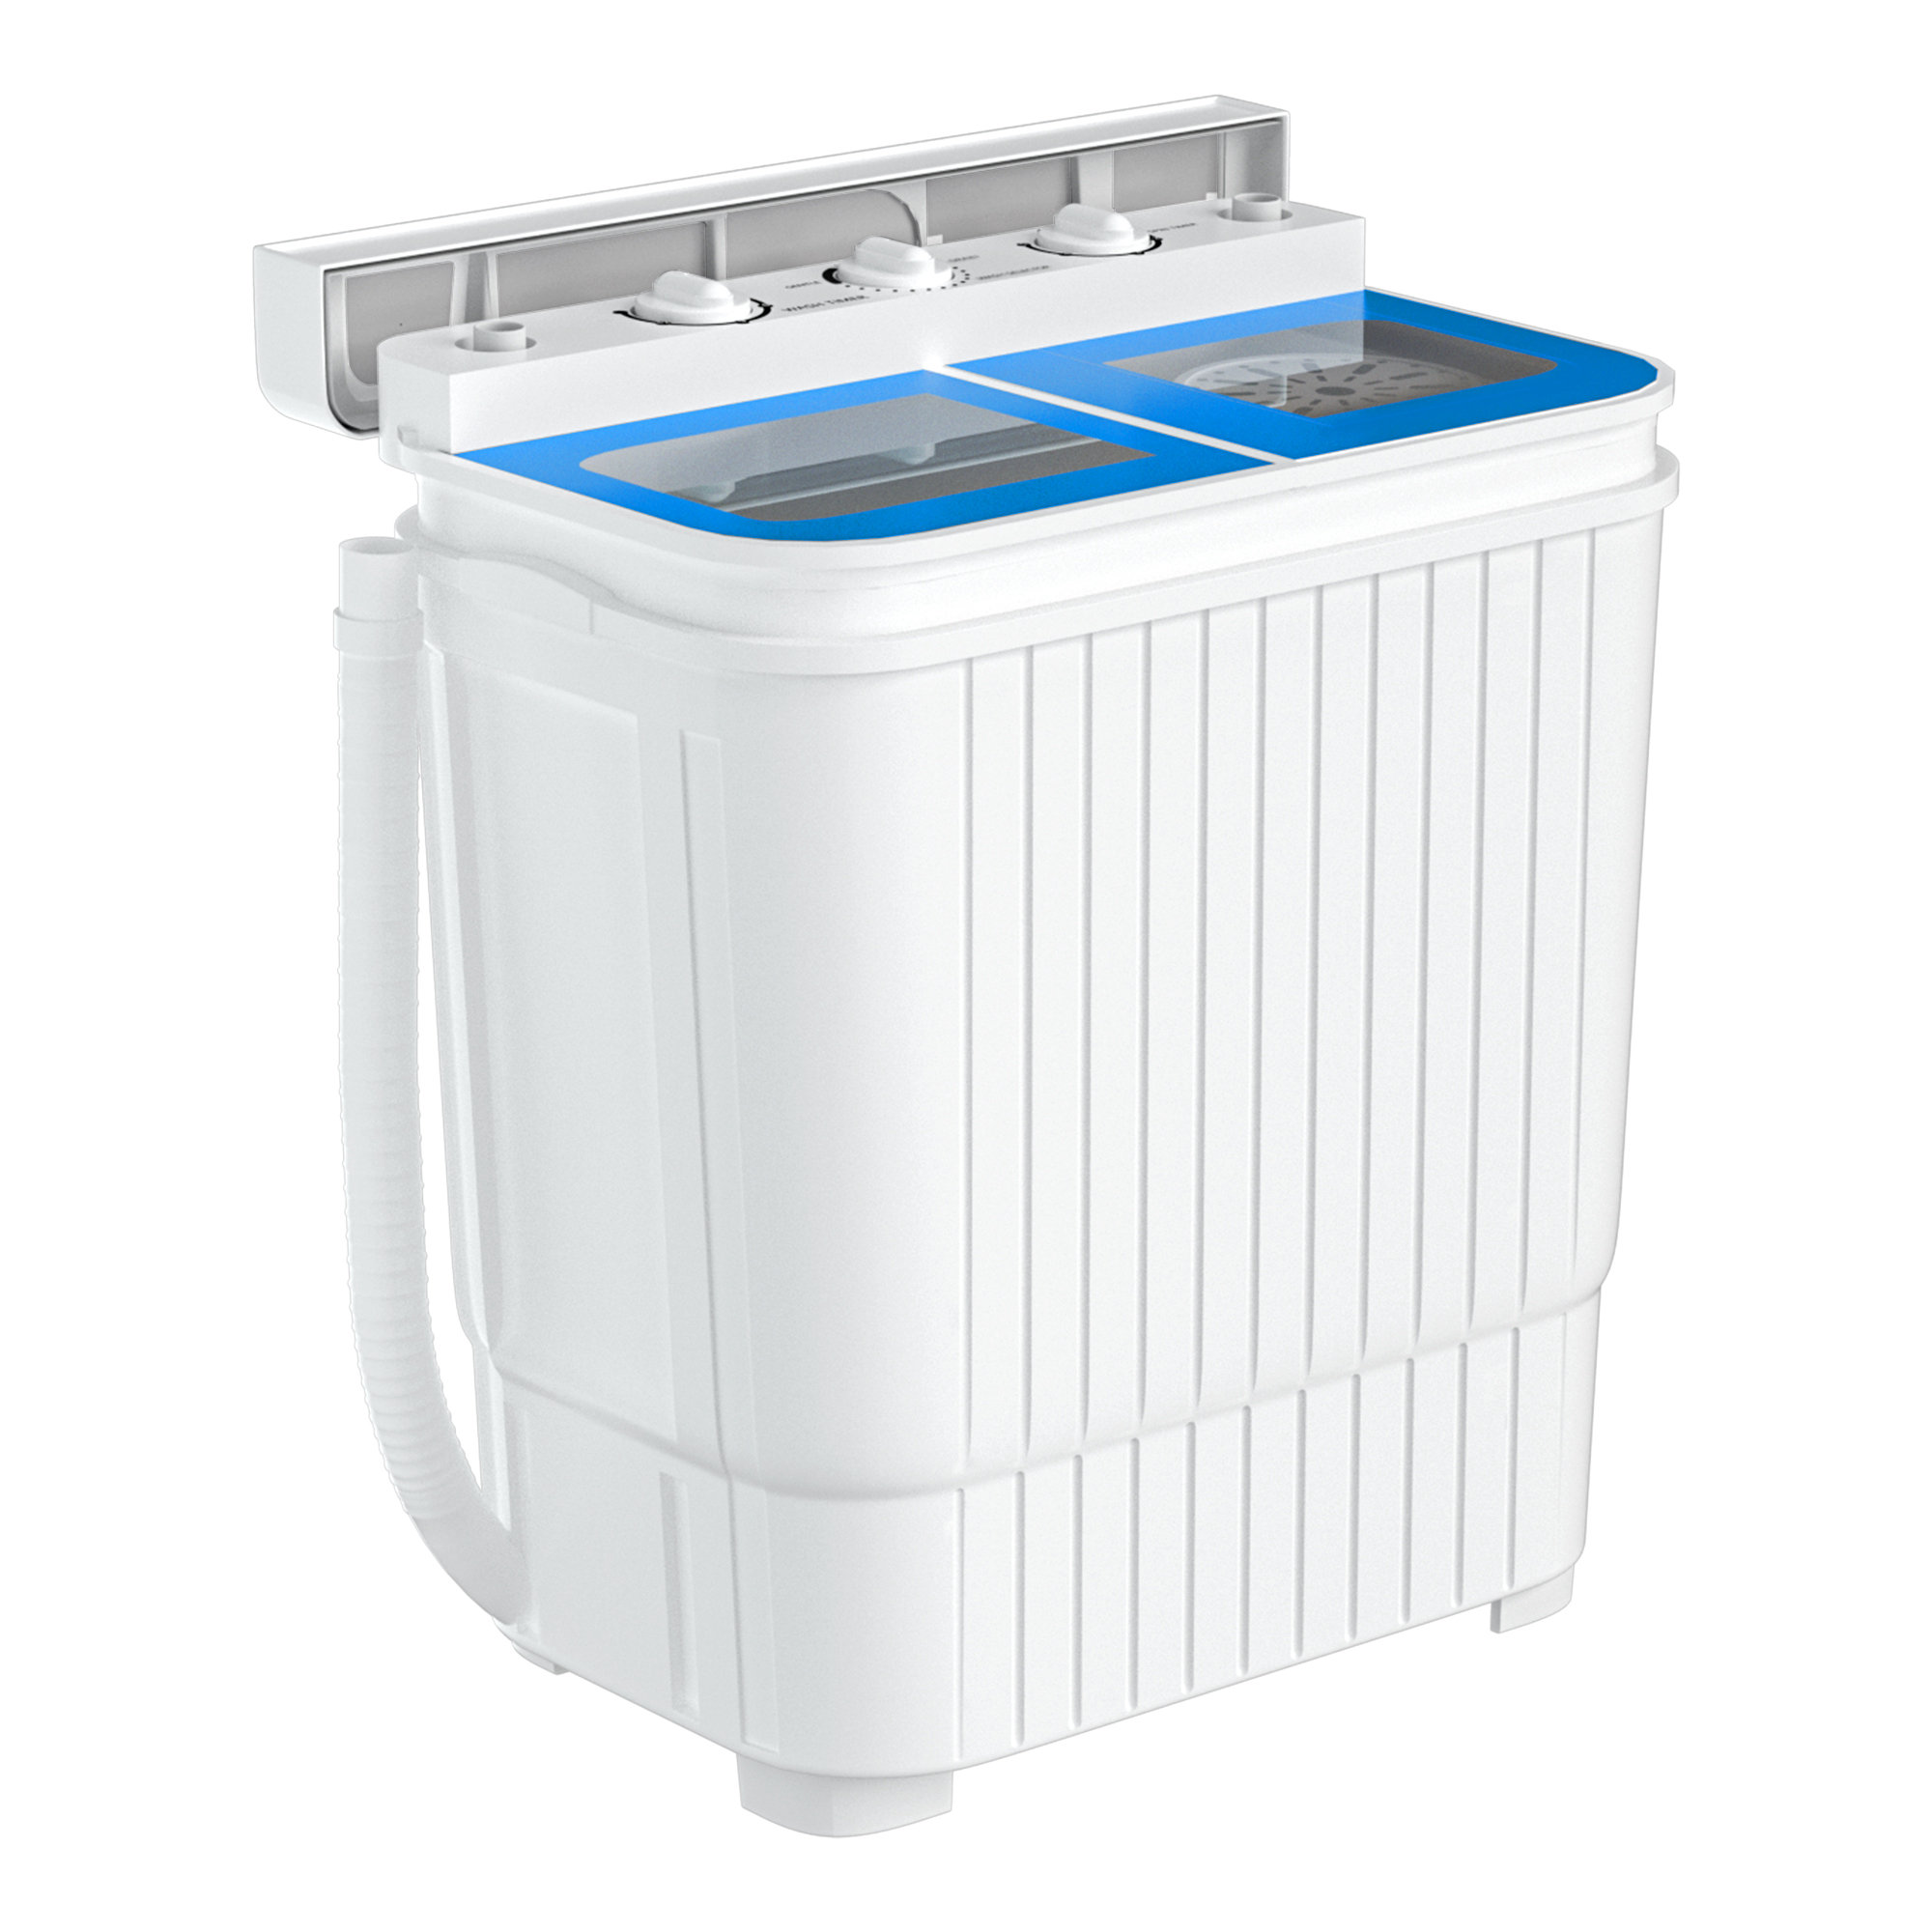 2 In 1 Portable Washing Machine, Twin Tub Compact Washer 28lbs